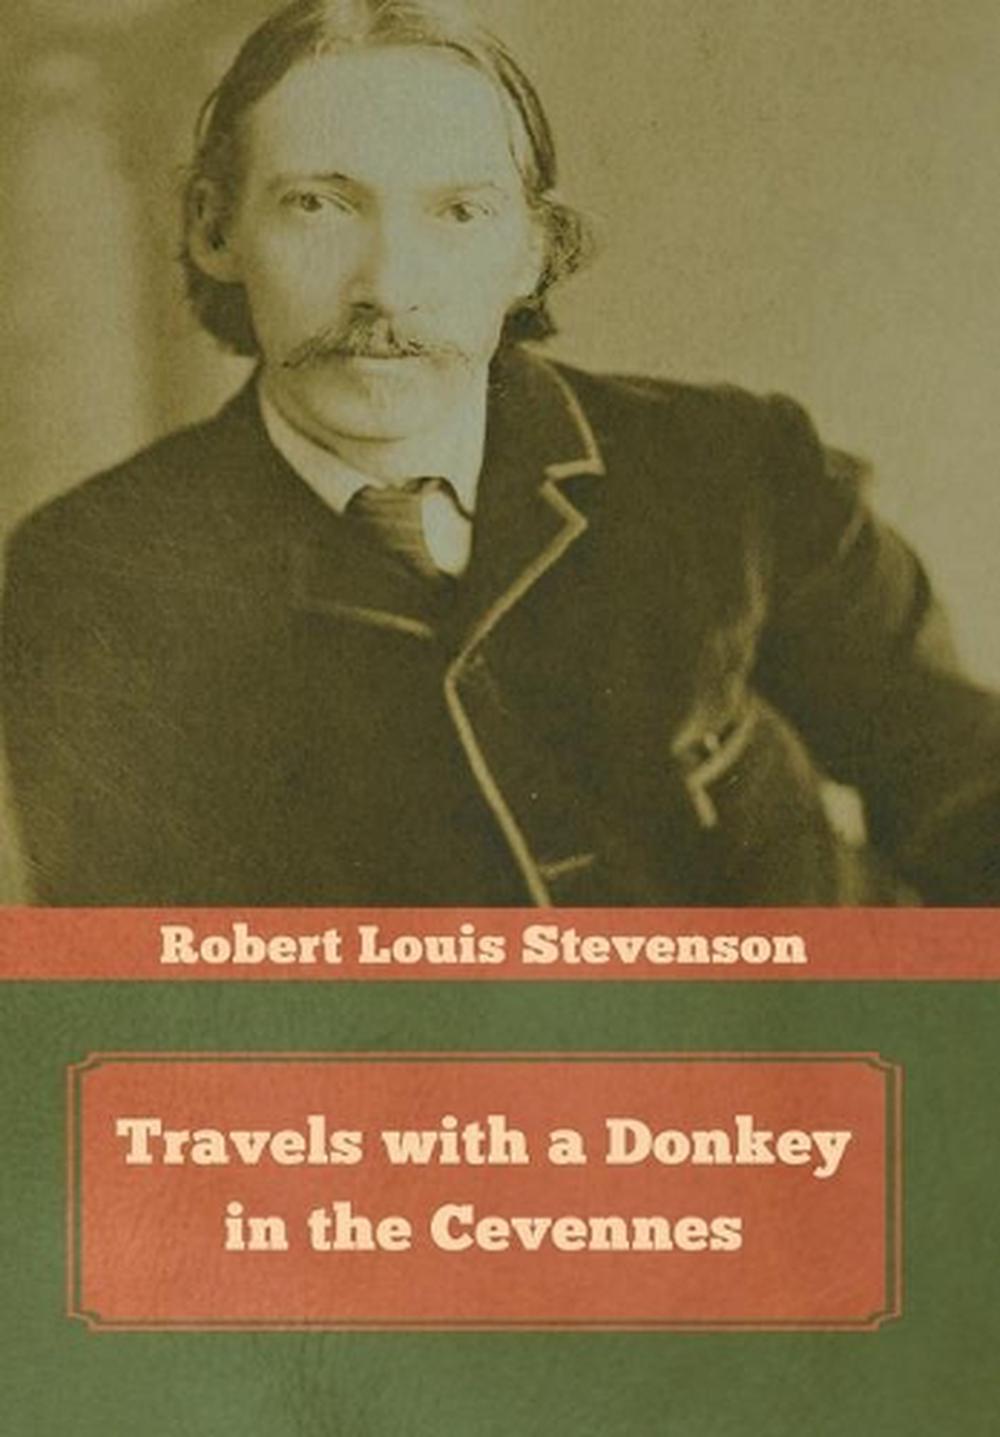 rl stevenson travels with a donkey